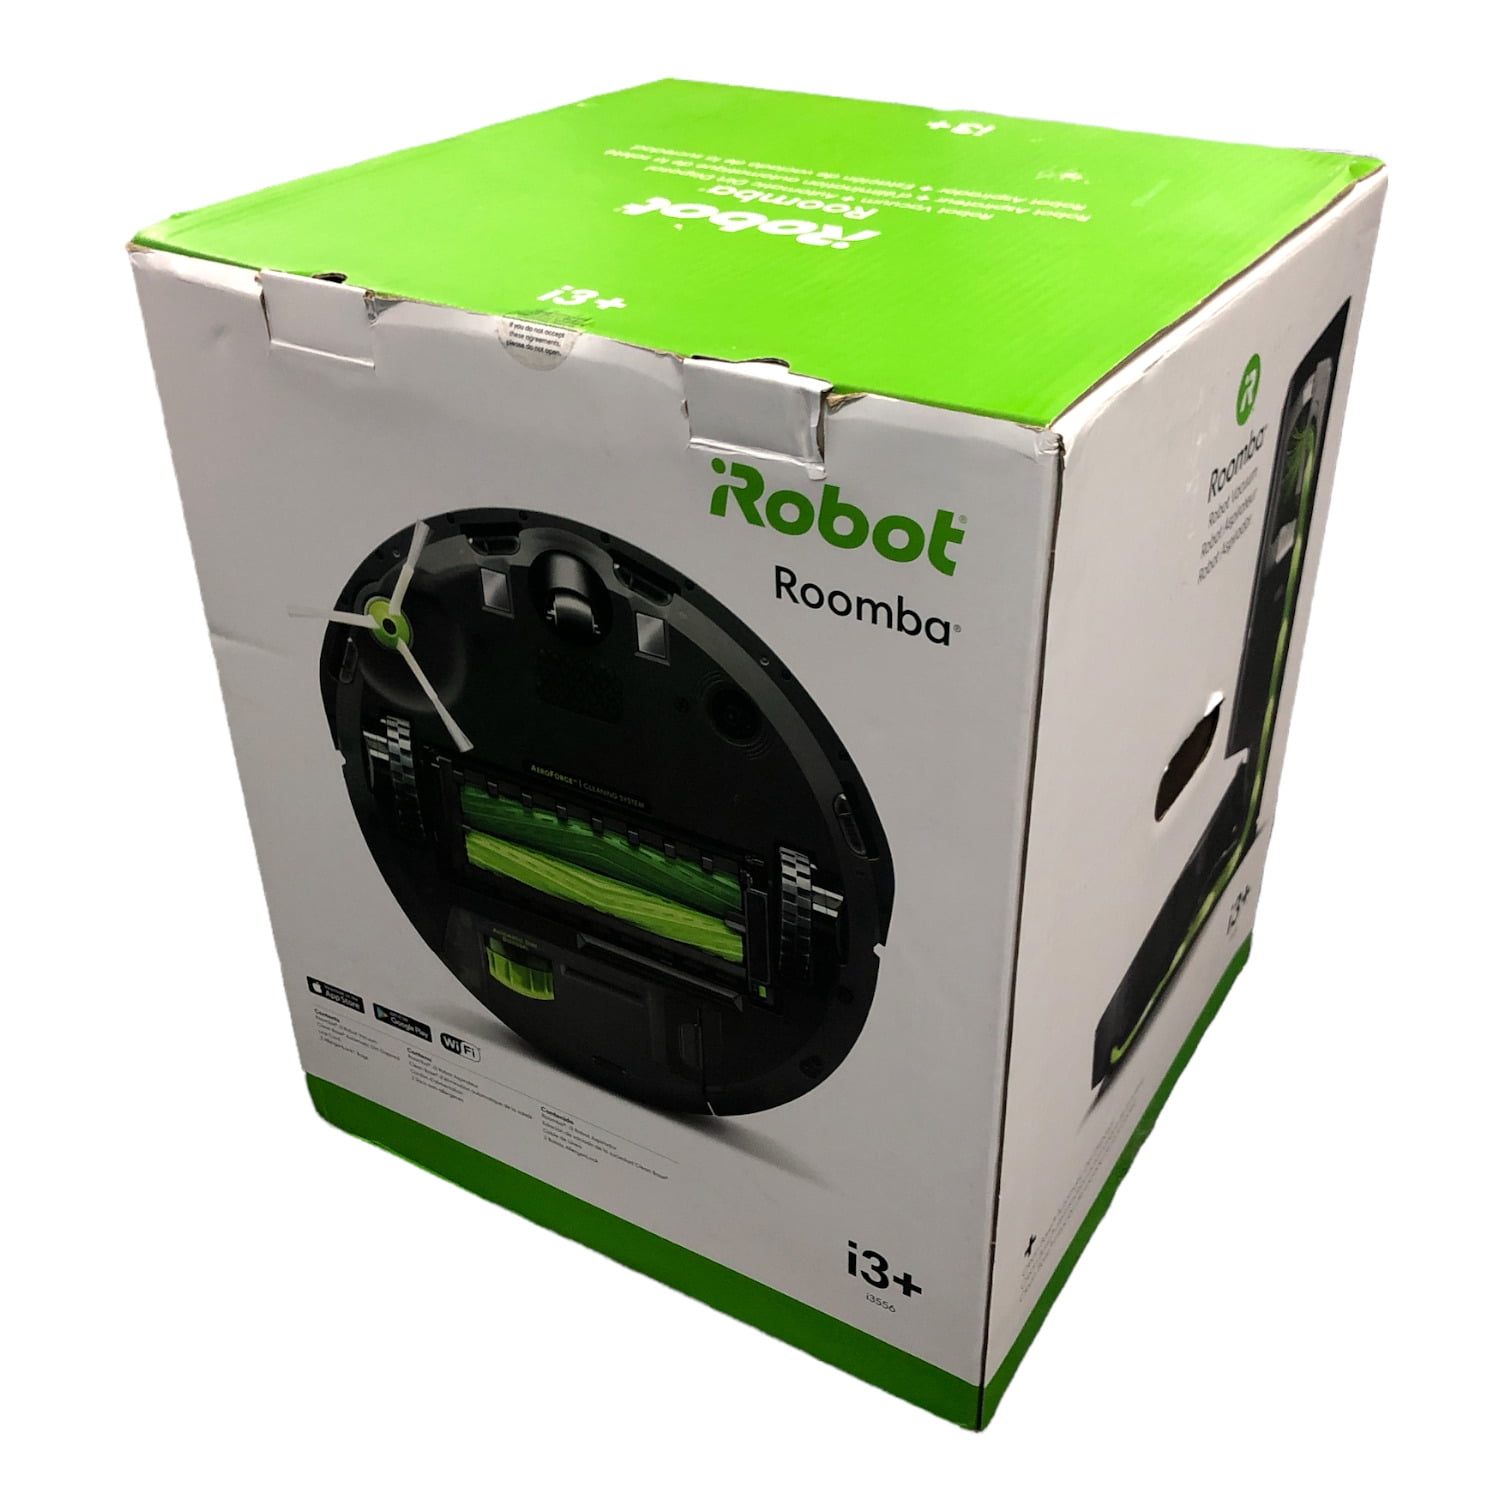 Aspiradora Robot I3+ Roomba - Negro